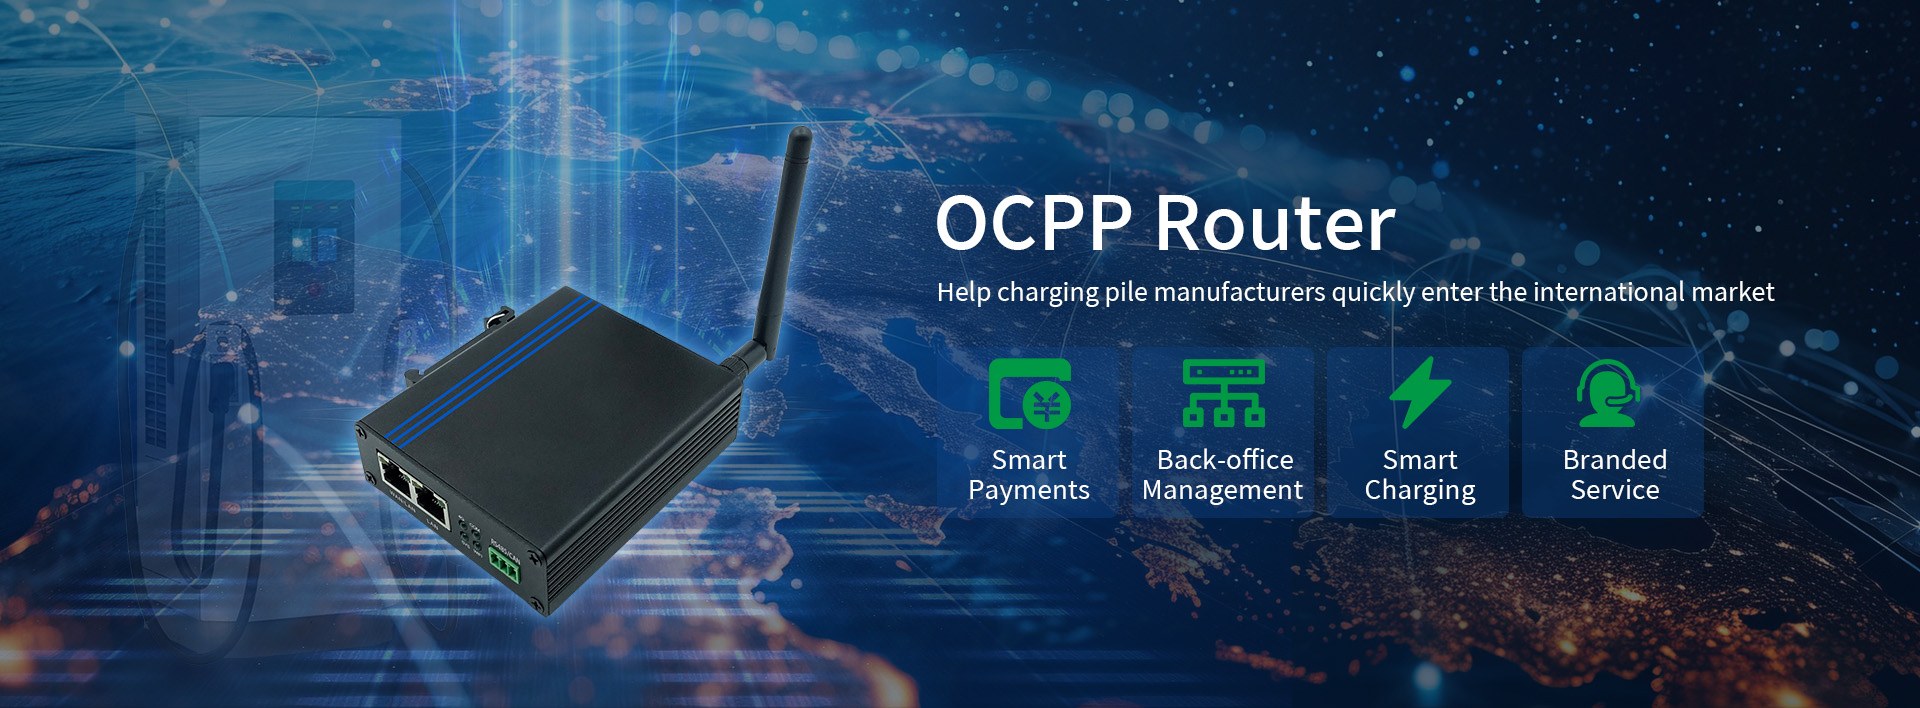 OCPP Router